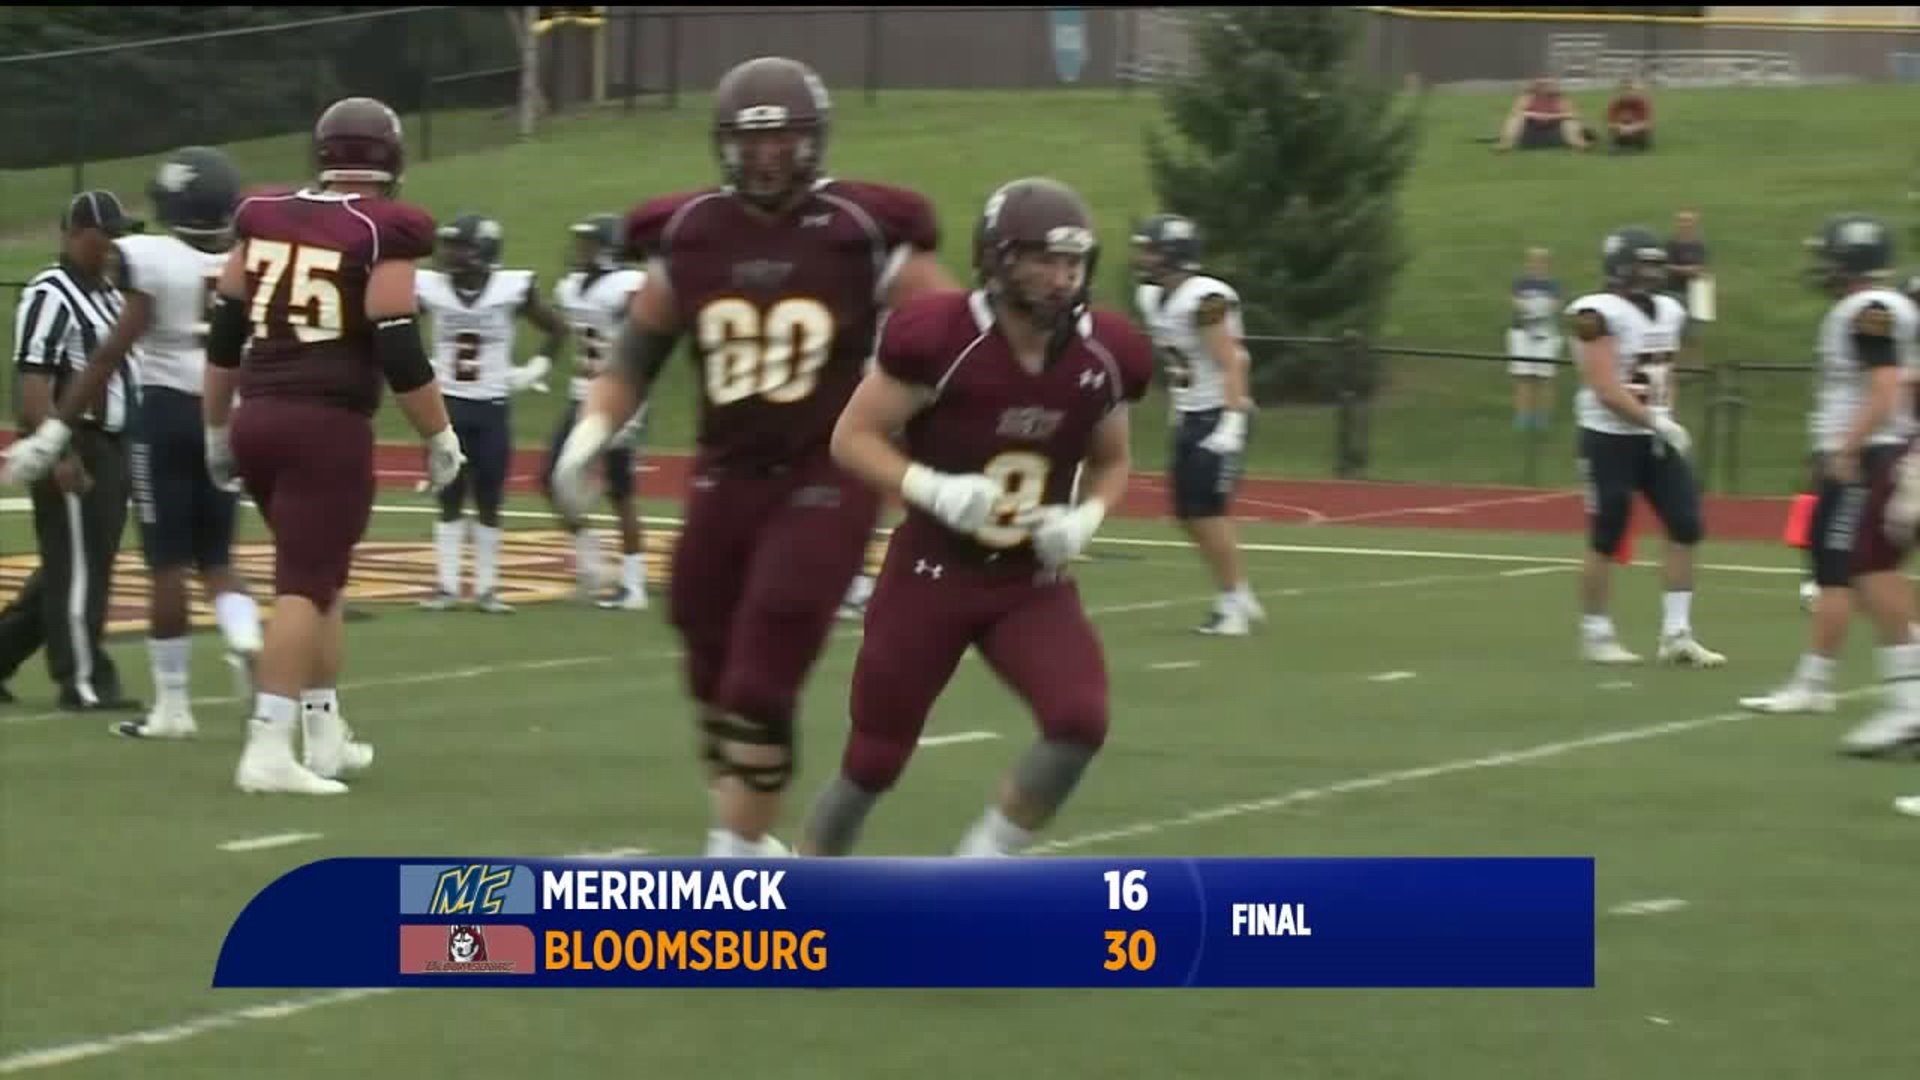 Bloomsburg 1-0 After 30-16 Win Over Merrimack